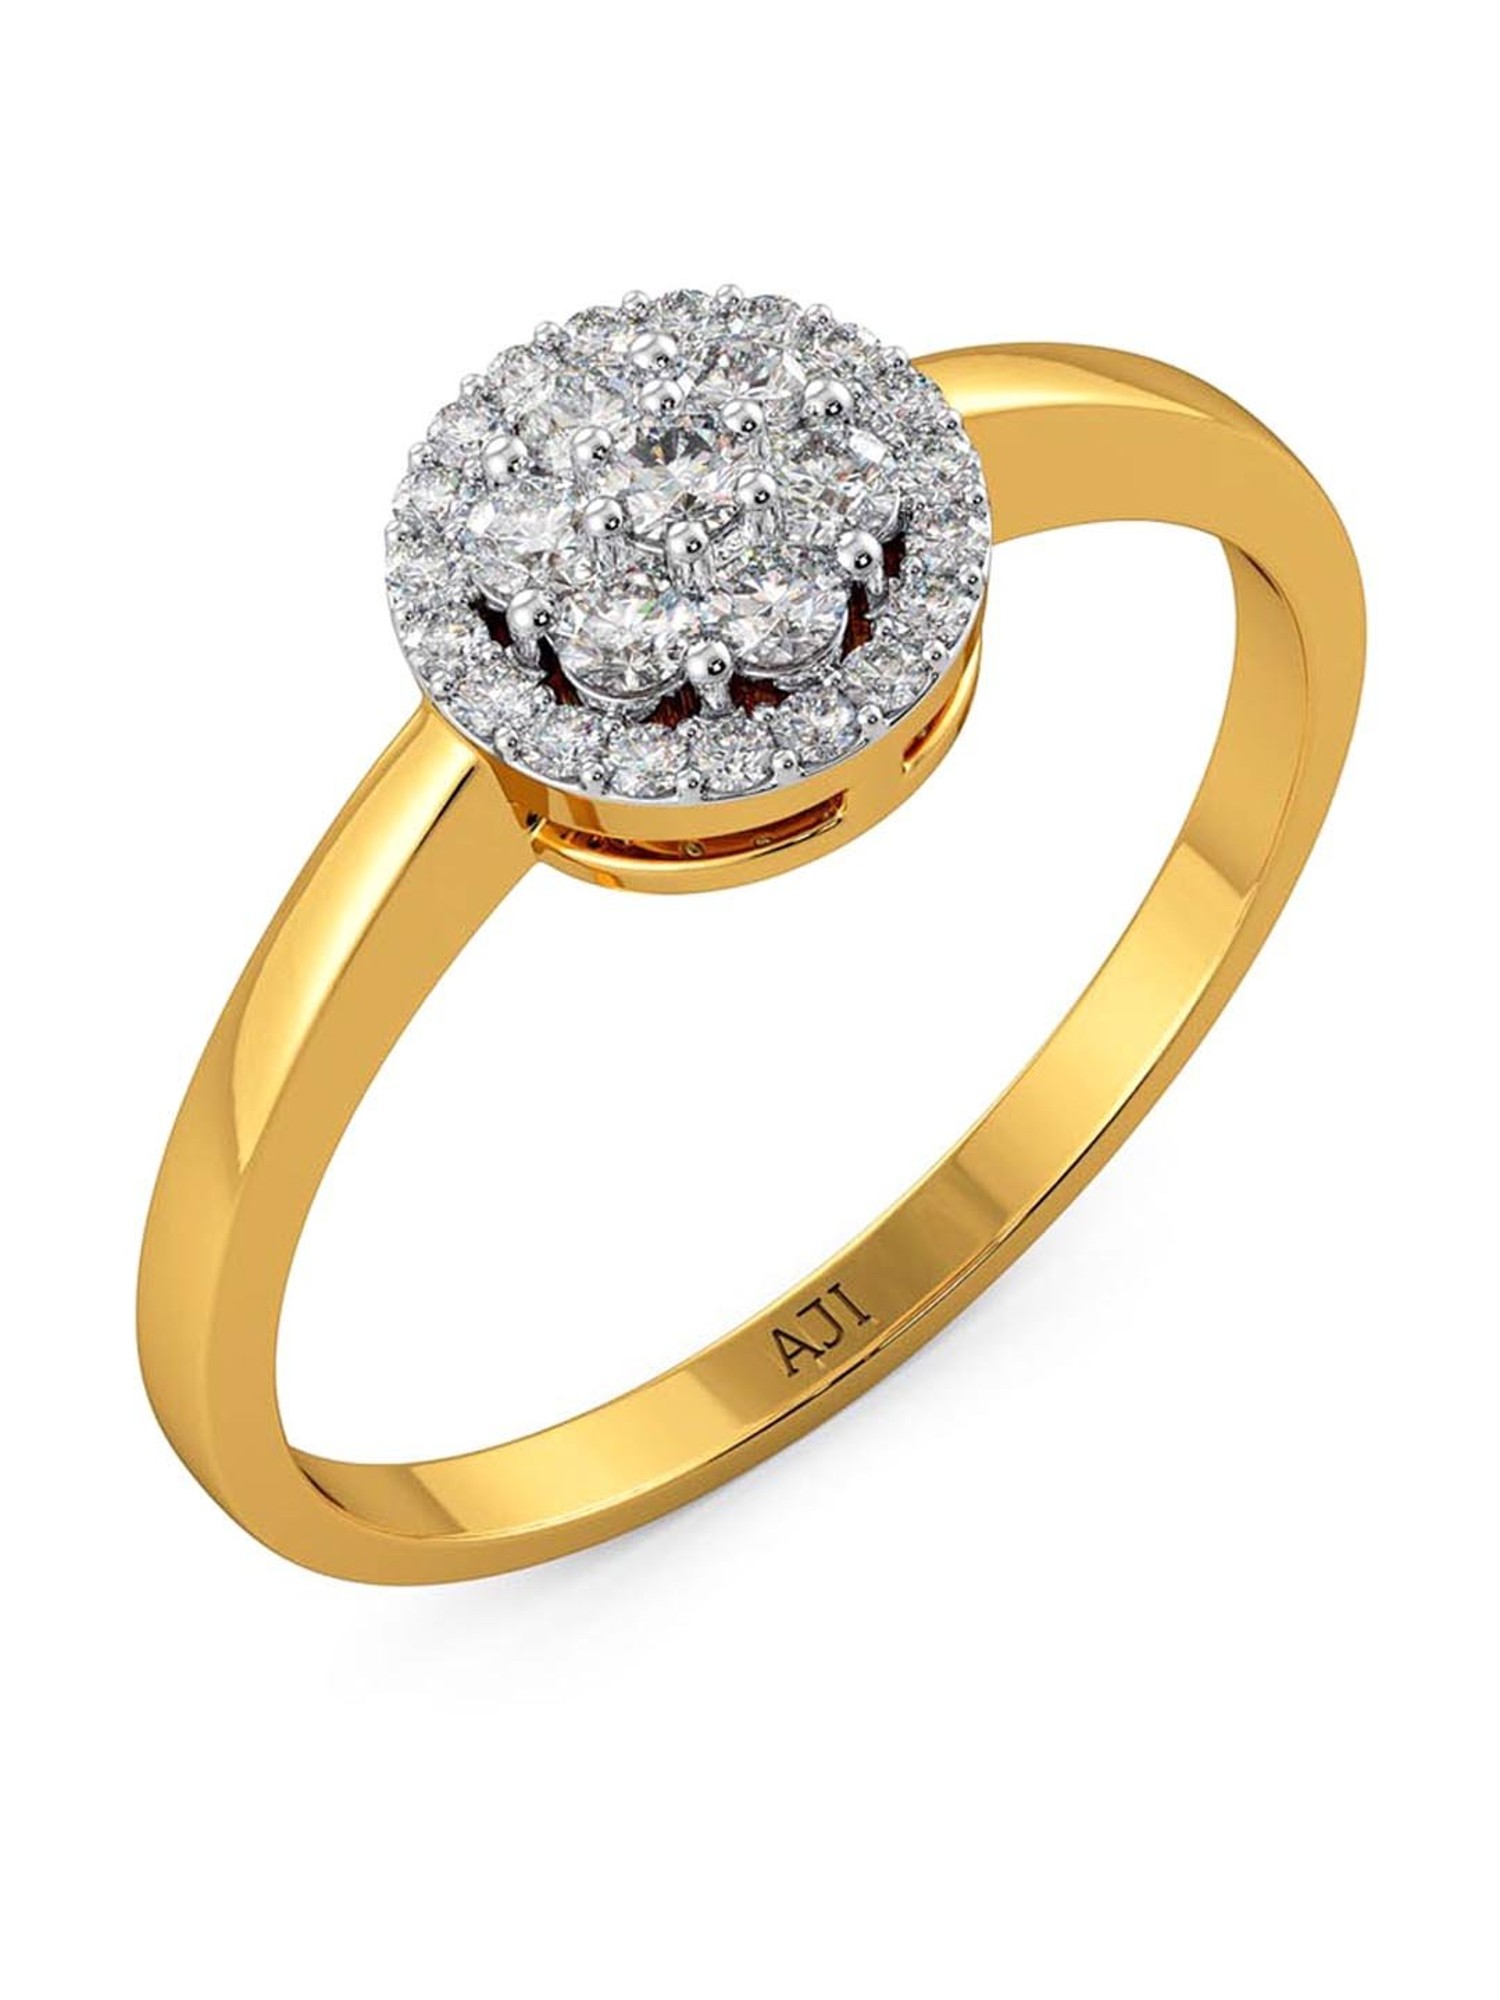 Women's Party Sleek Diamond Ring at Rs 28000 in Mumbai | ID: 21272732655